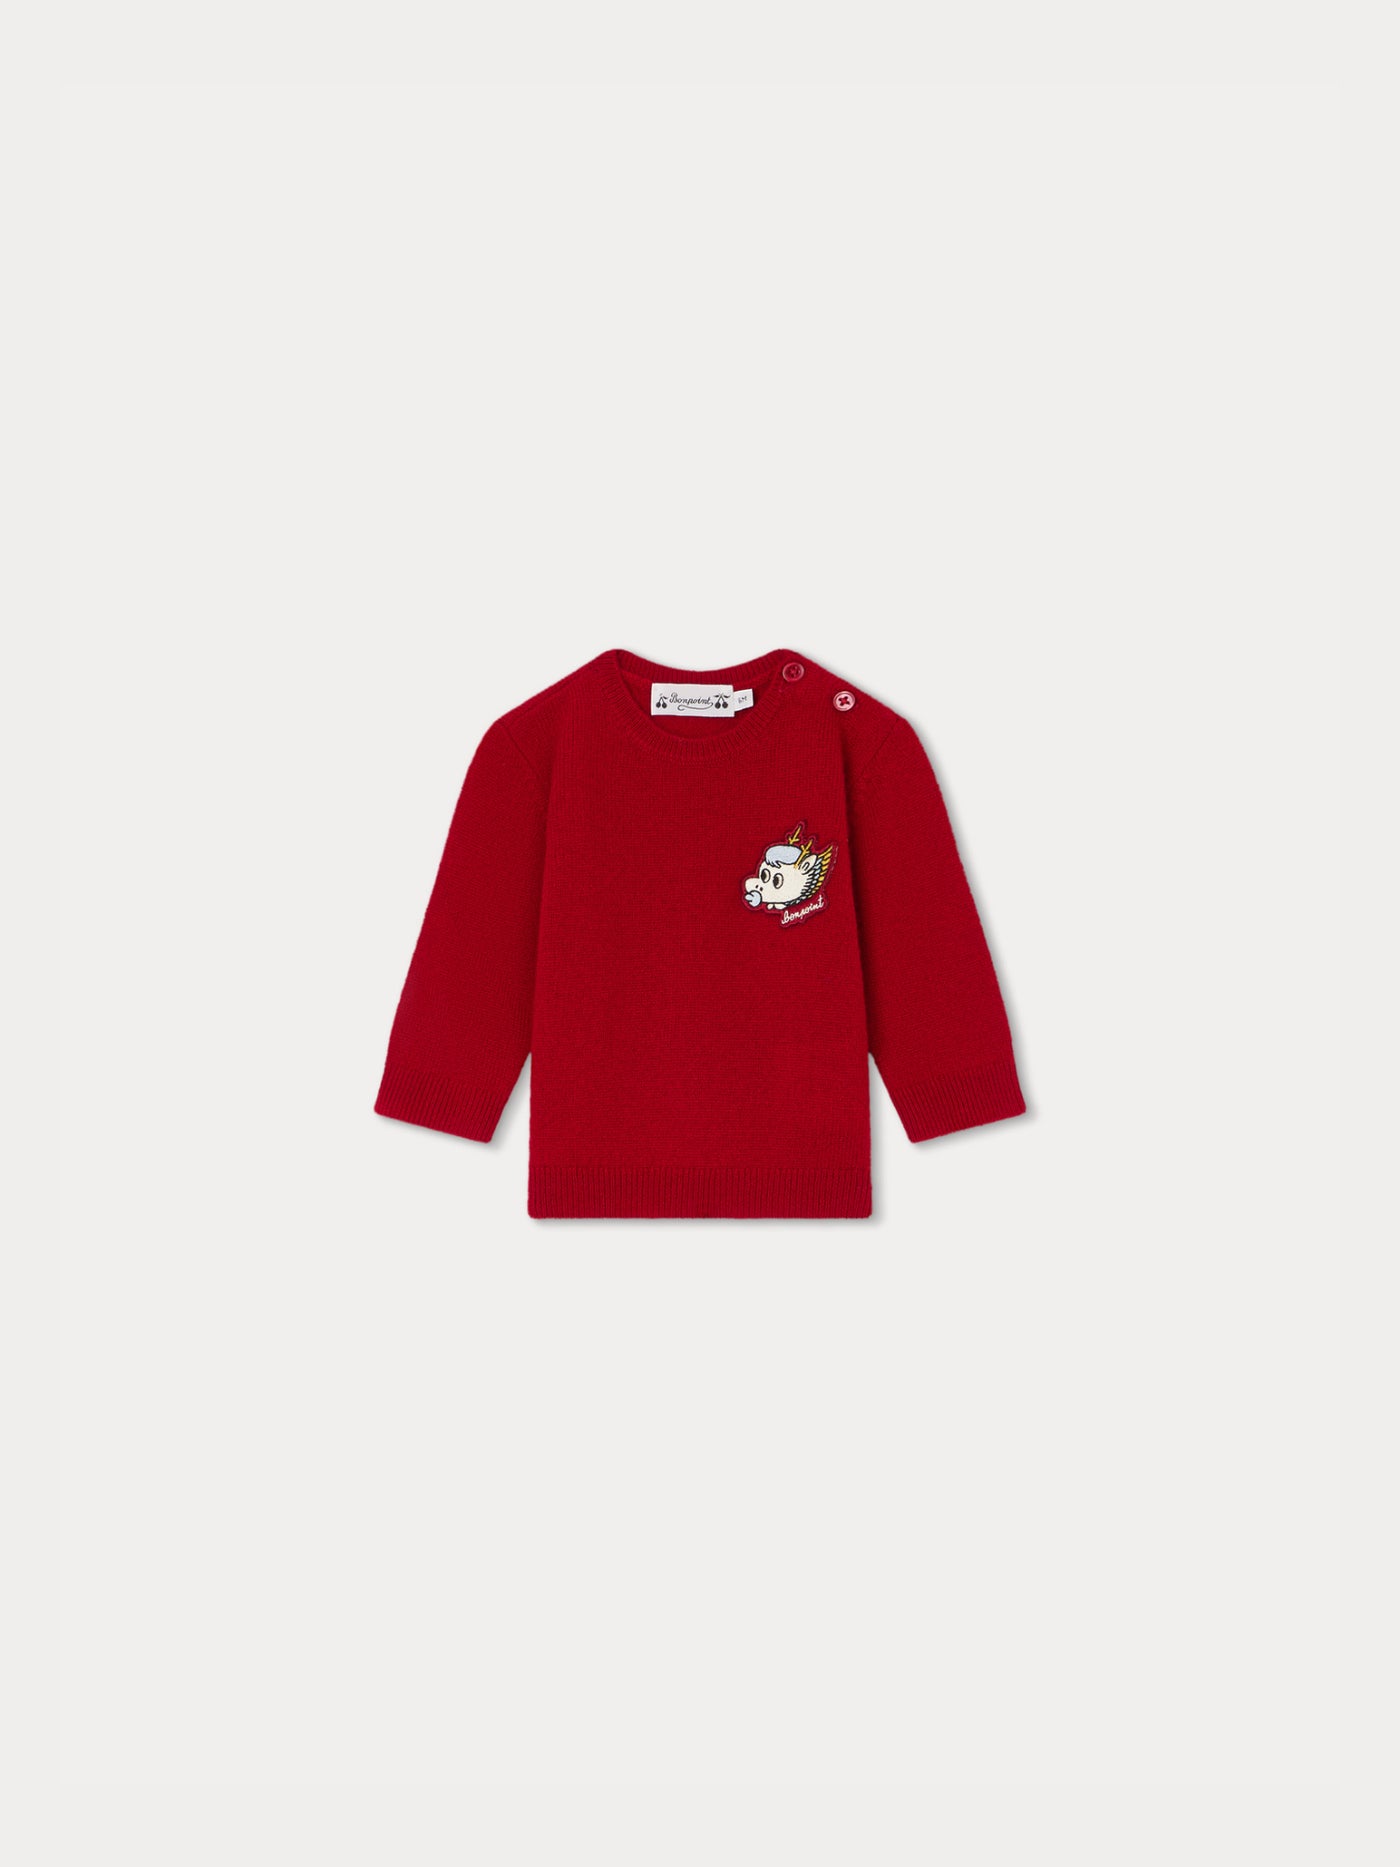 Almire Sweater ruby